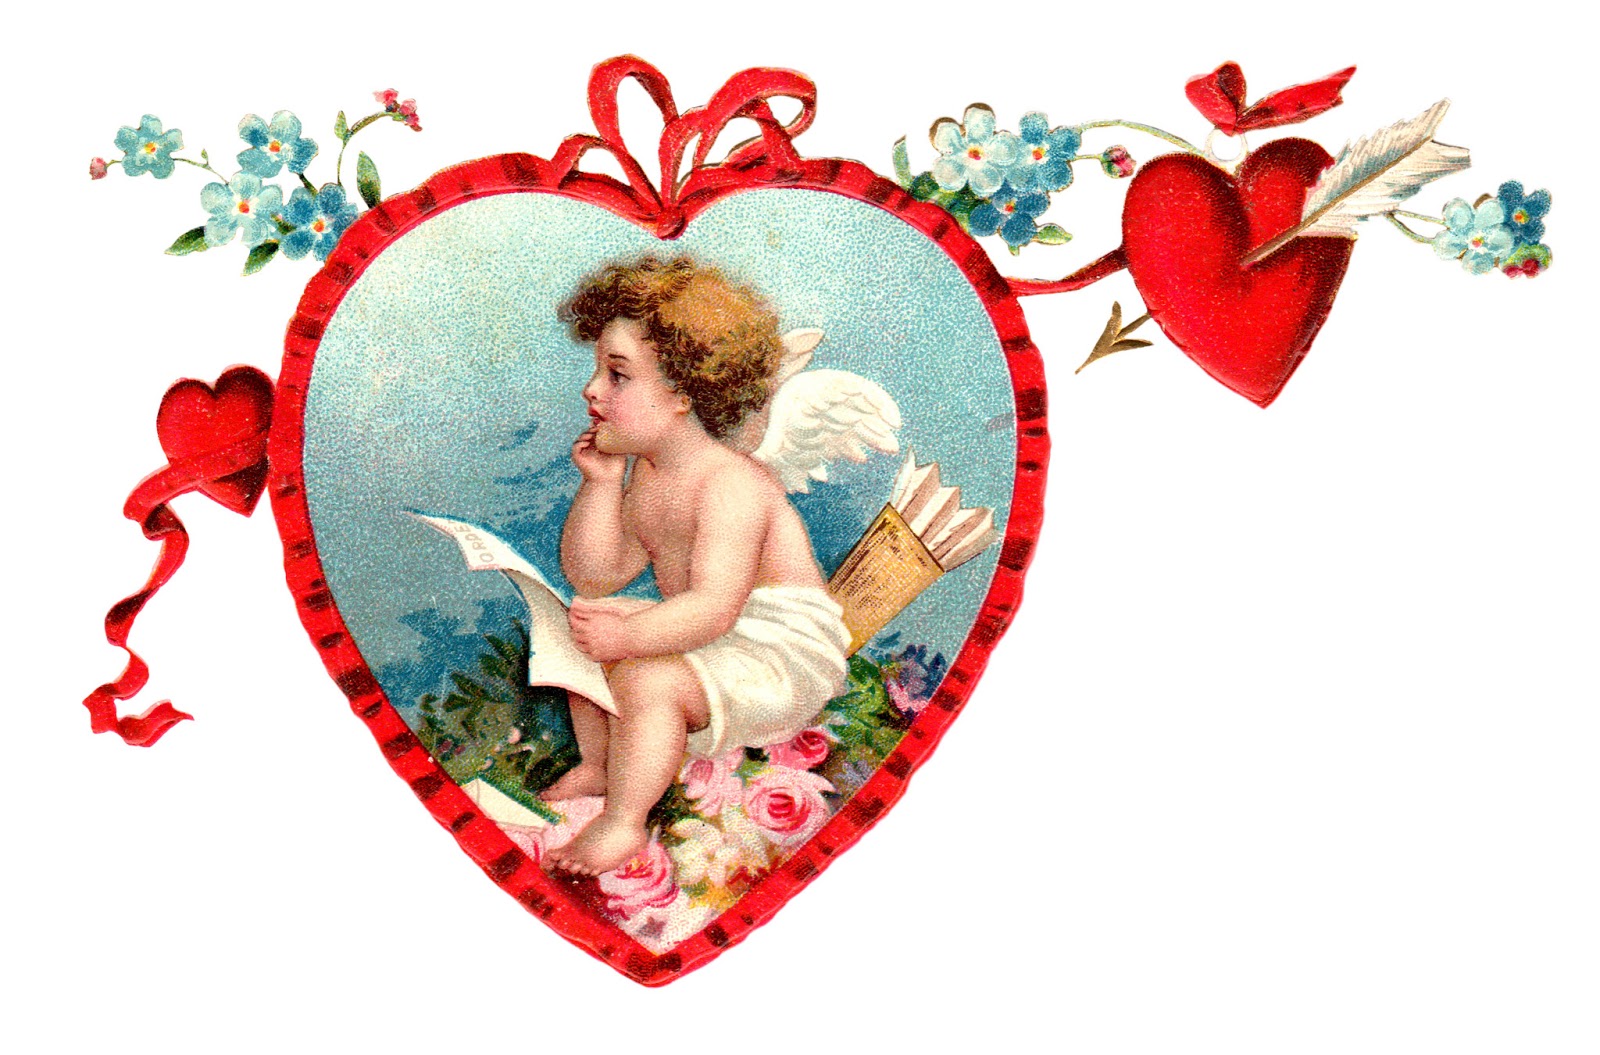 Victorian Image - Cherub with Hearts Valentine - The Graphics Fairy